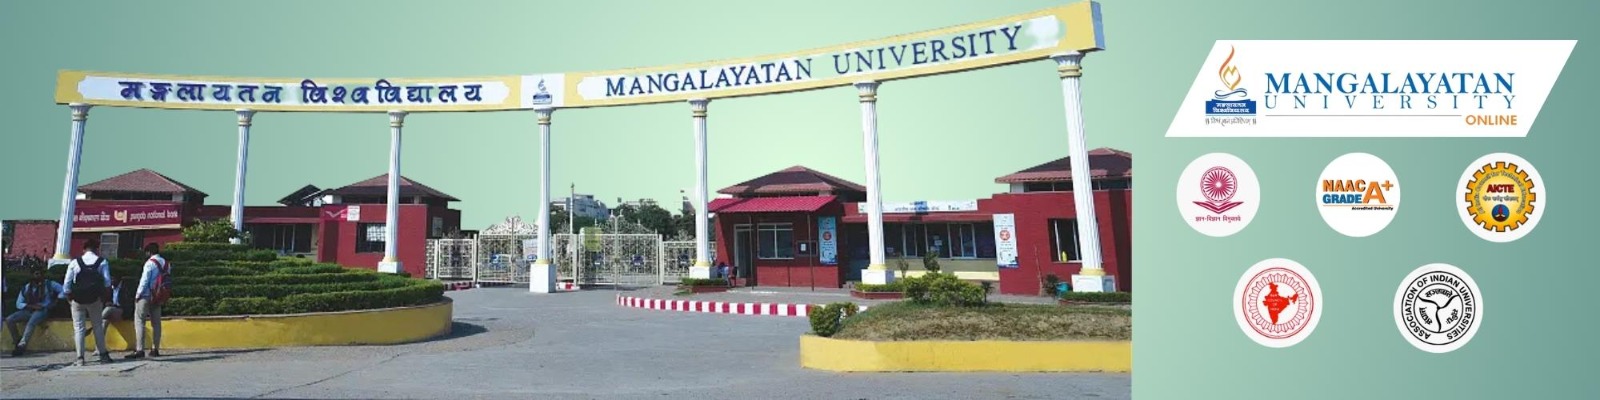 Unlock Your Future: Pursue an Online BCA Degree at Mangalayatan University